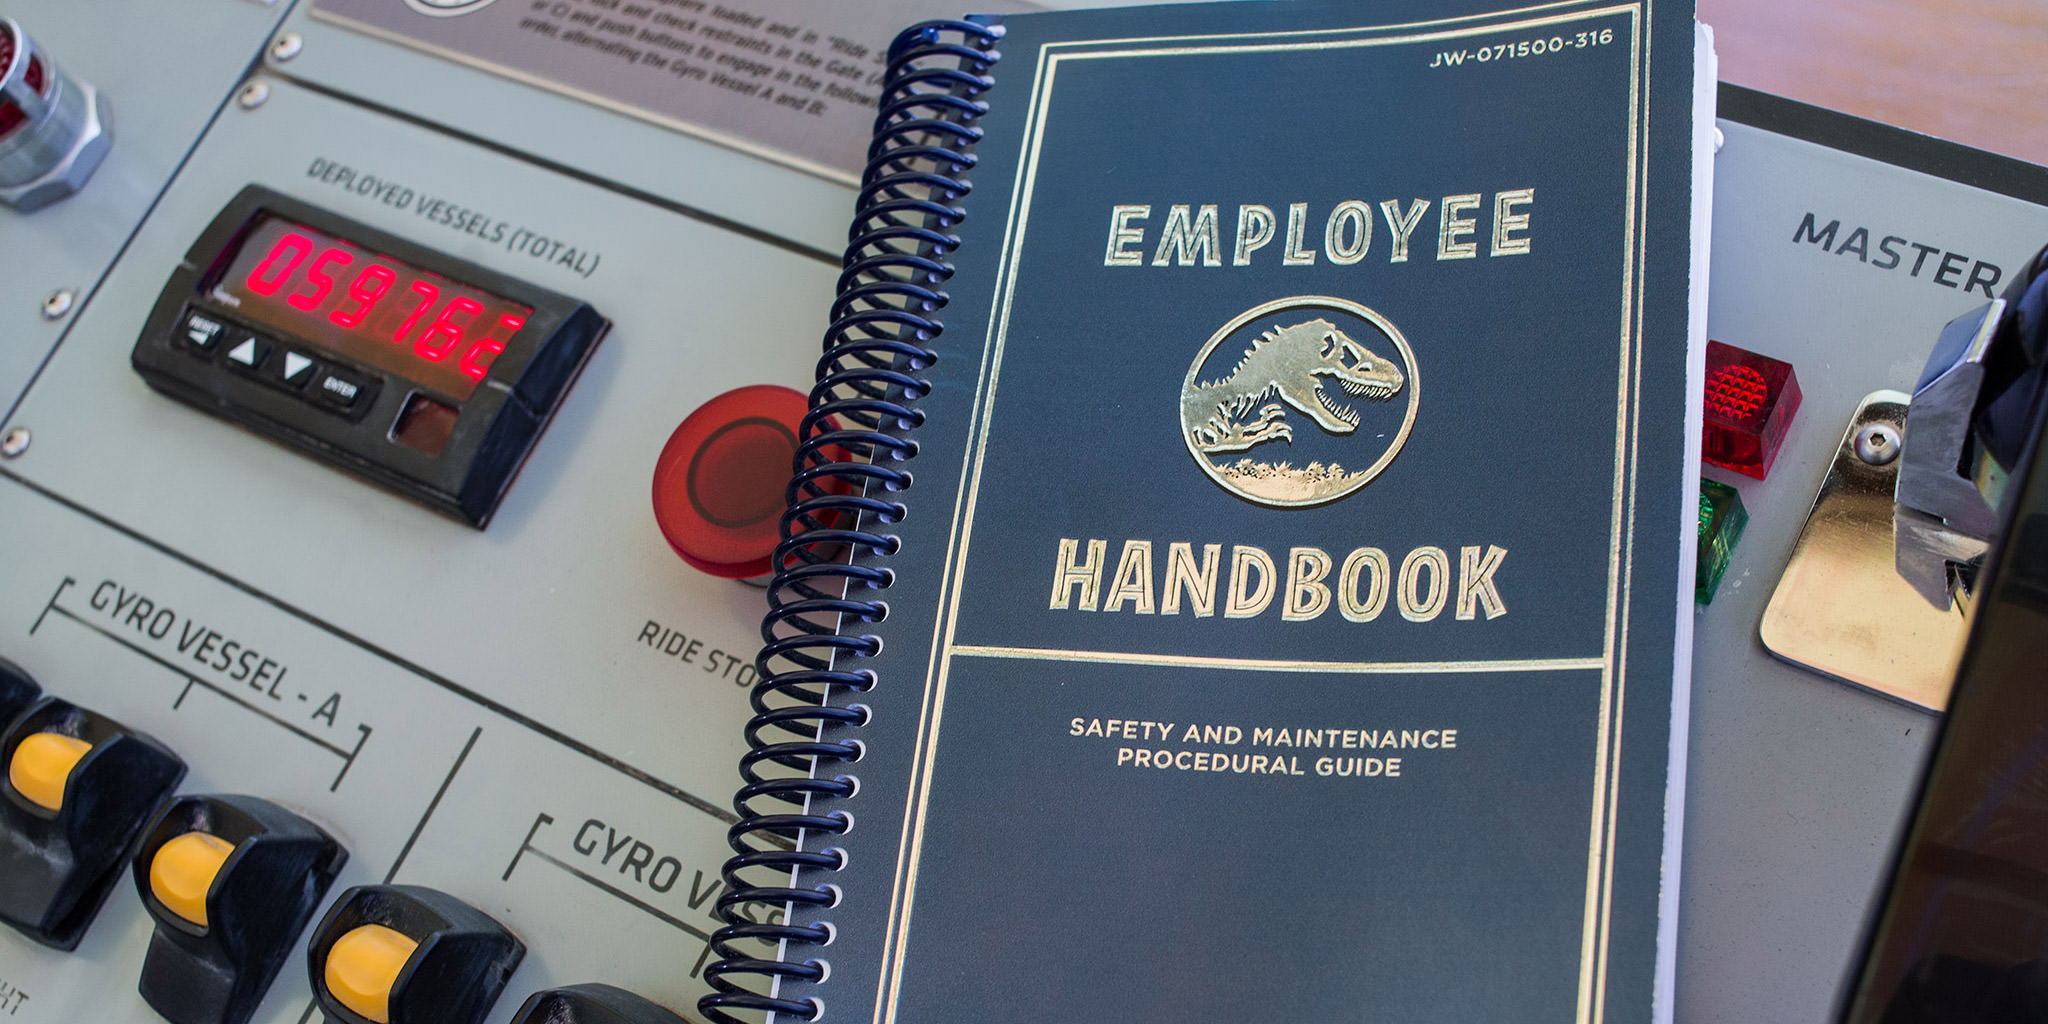 Employee Handbook Gyrosphere